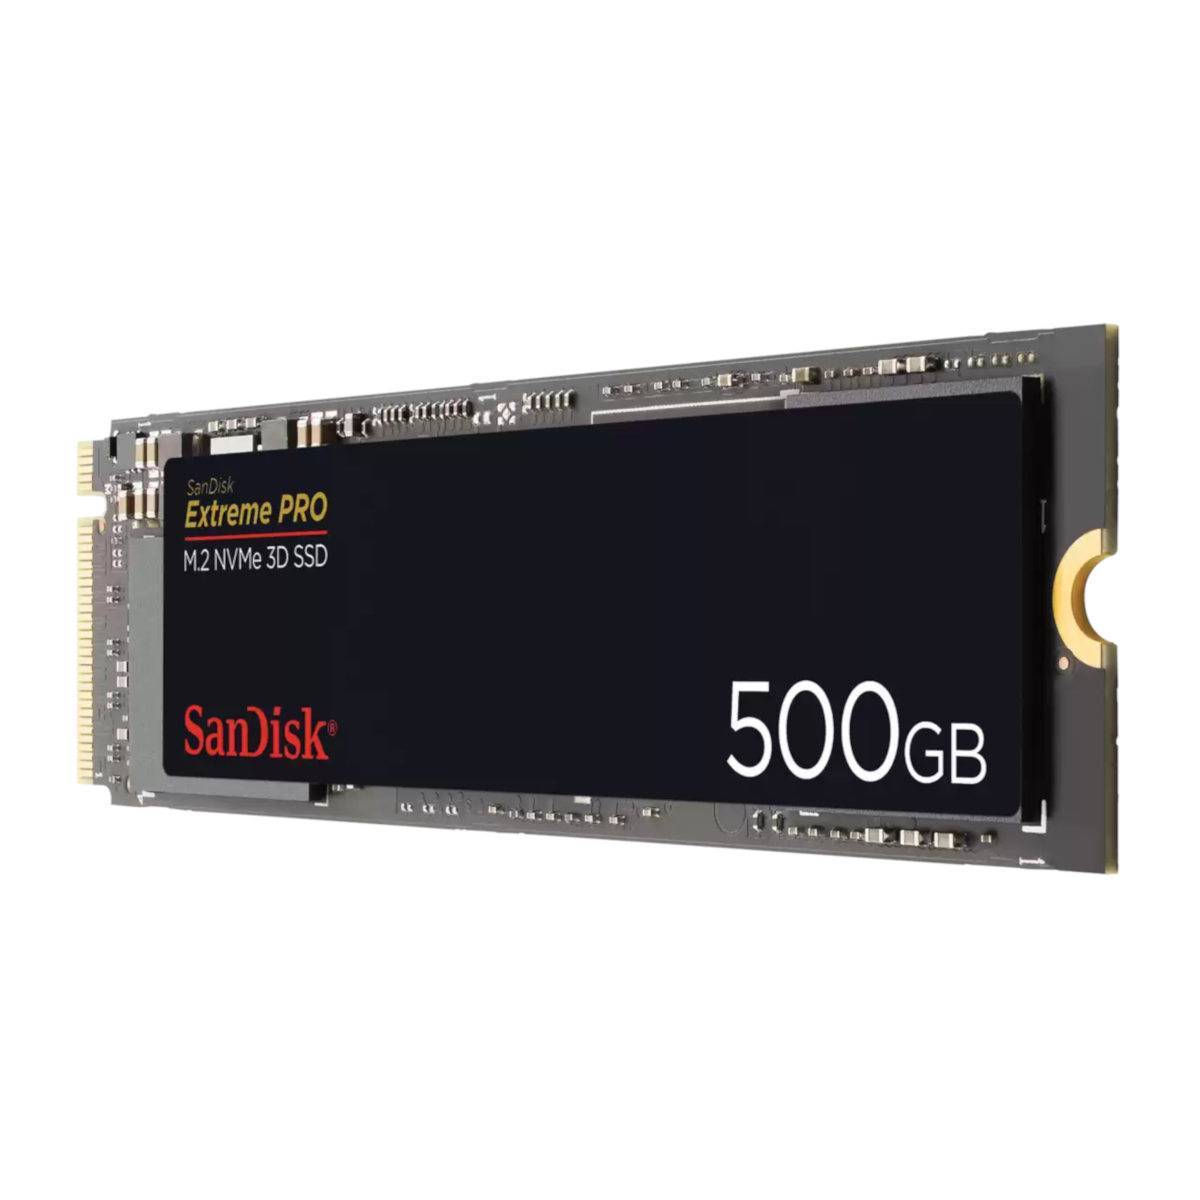 M2 PCIe 500GB Sandisk Extreme PRO